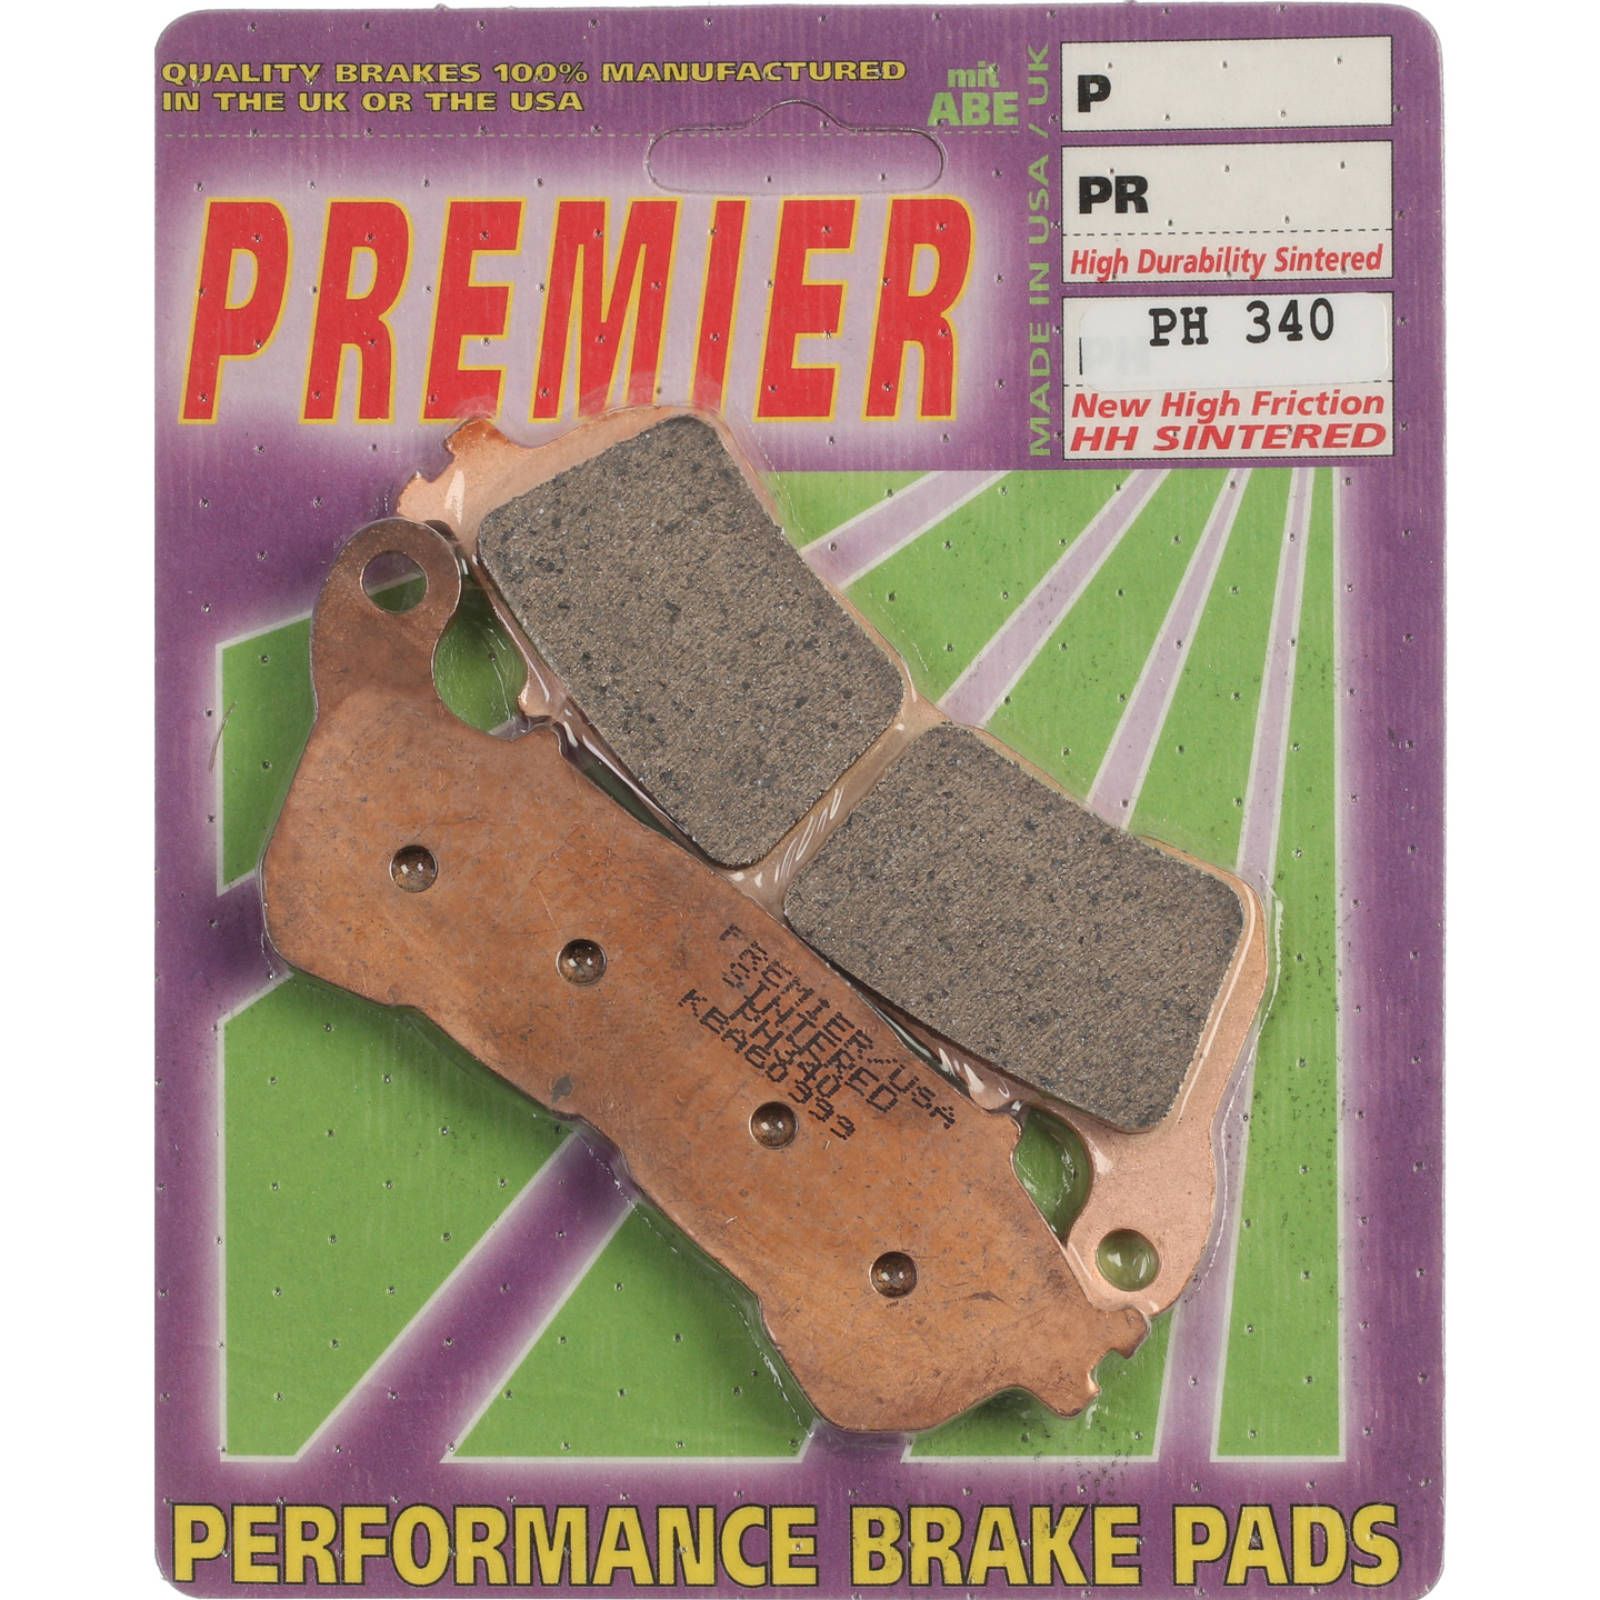 New PREMIER Brake Pad - PH Street Sintered (GF257S3) #PBPH340